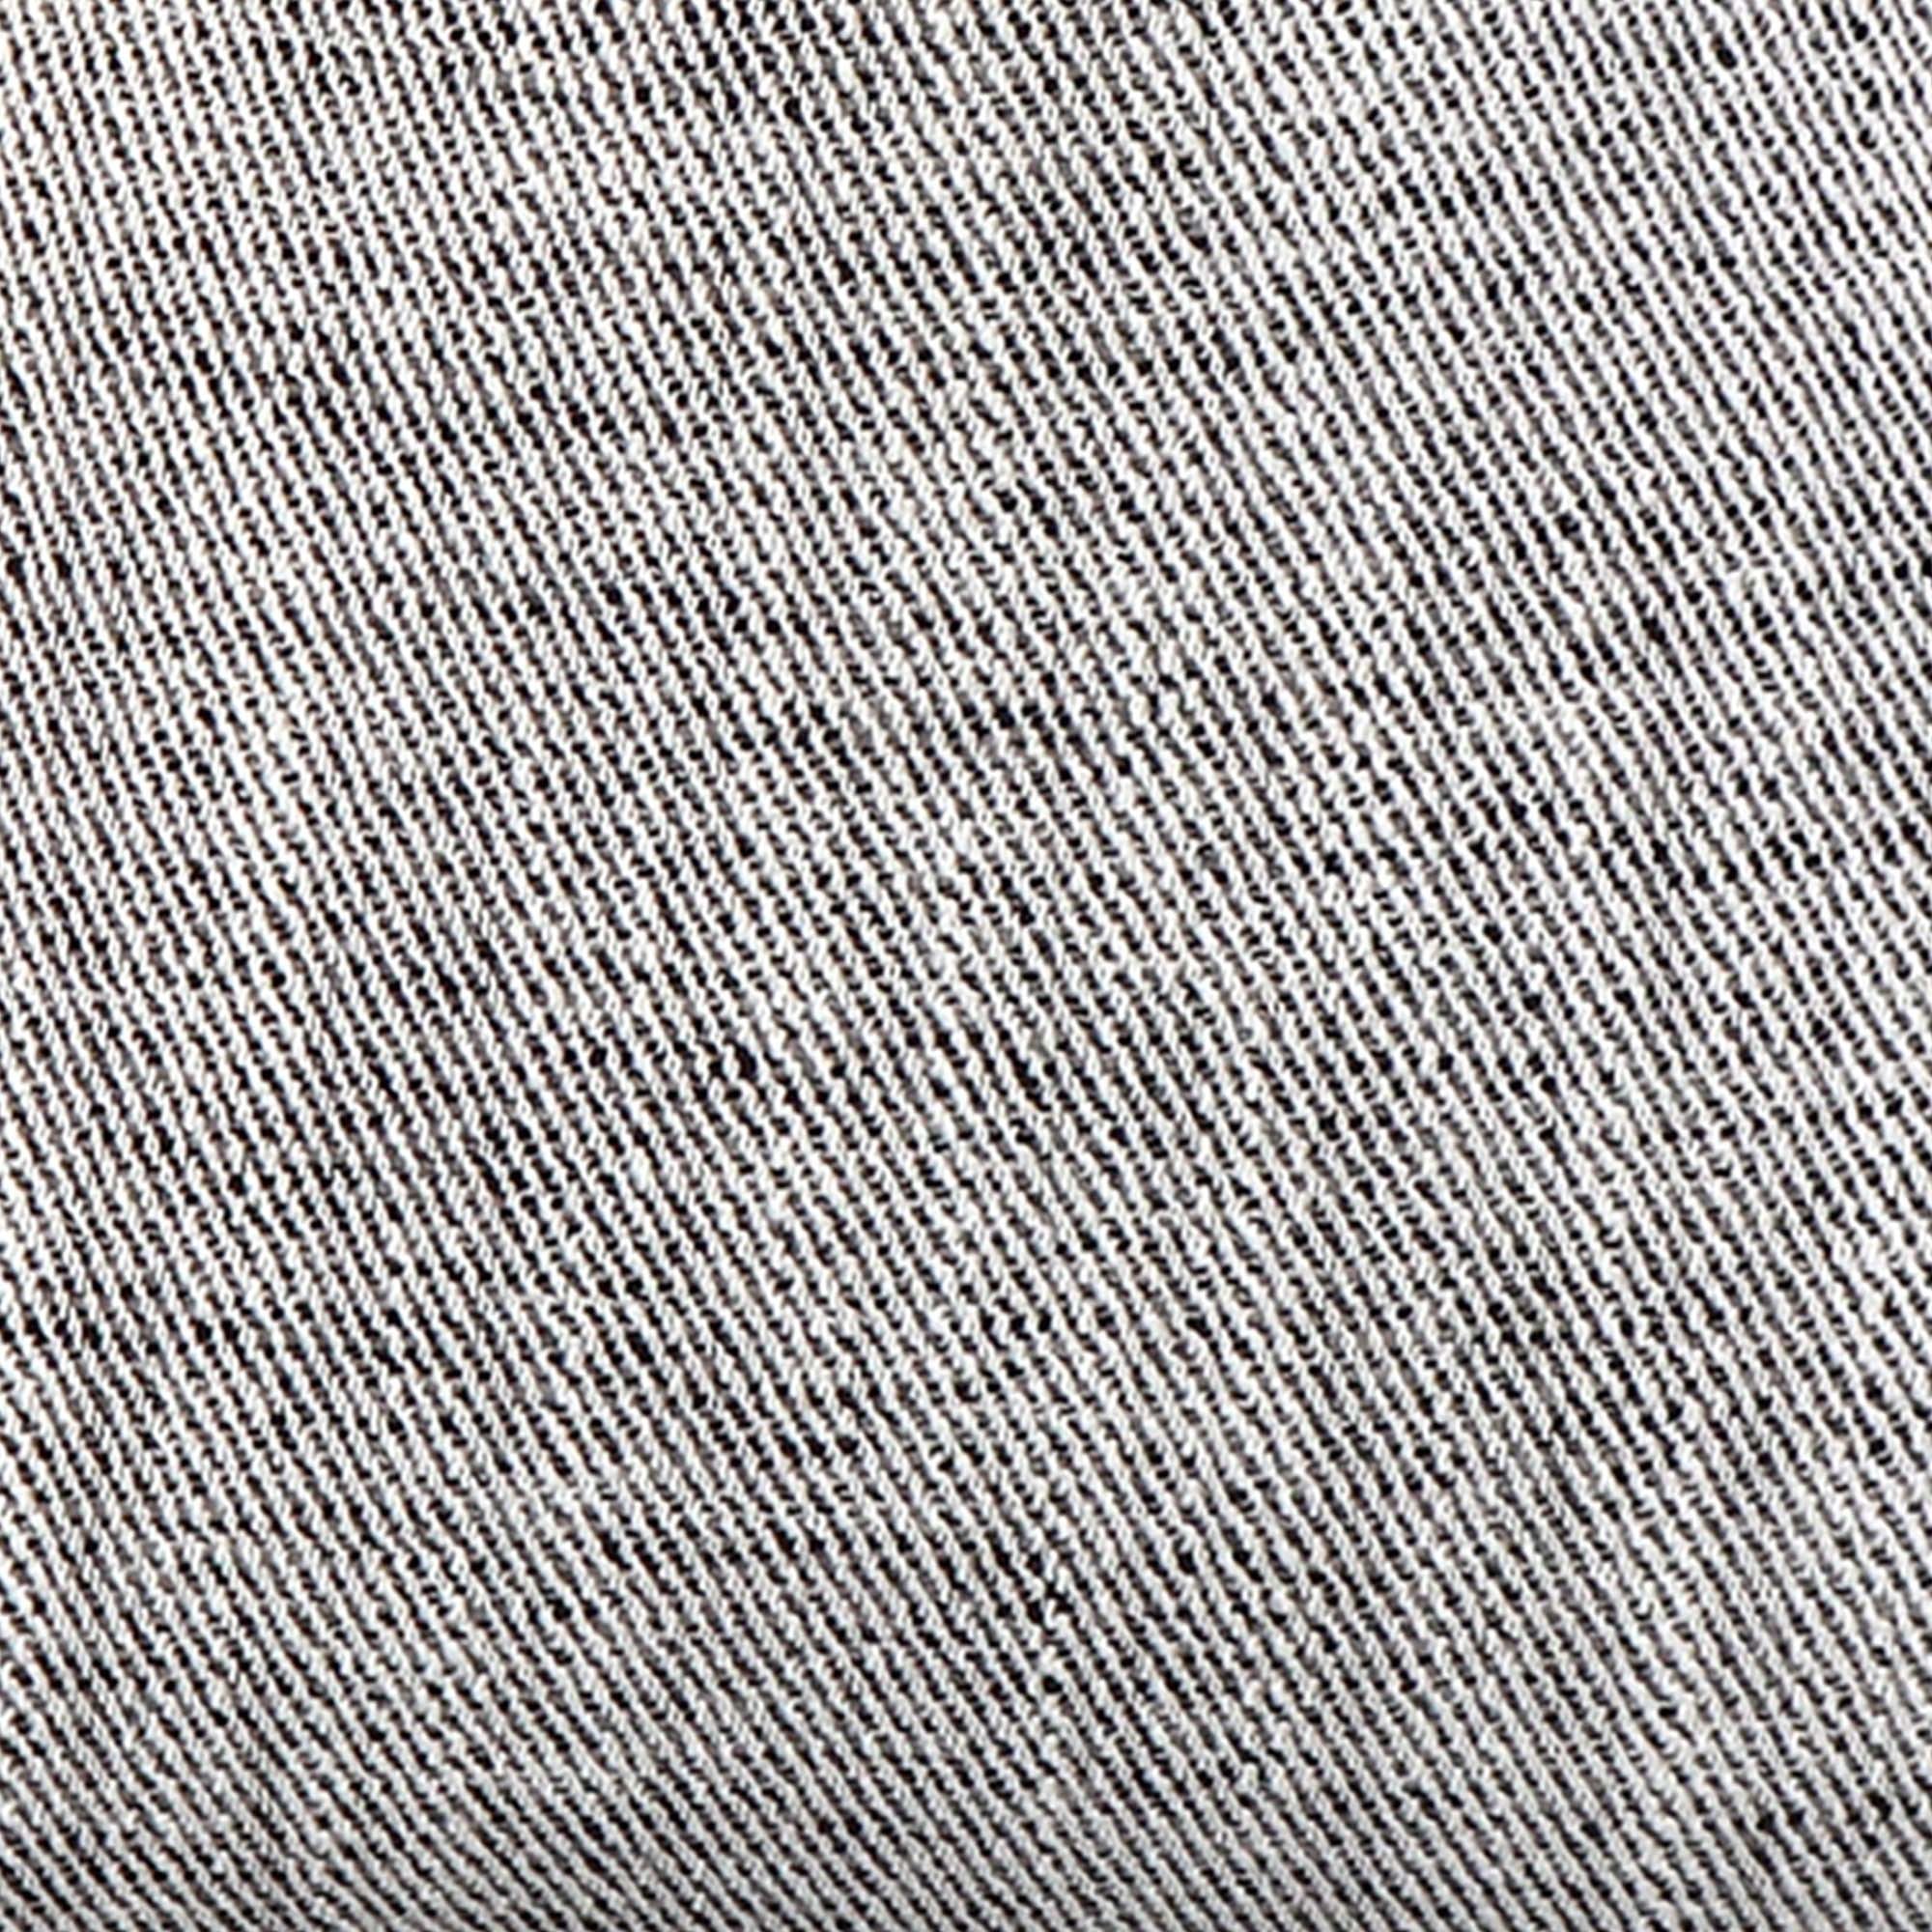 Everett Performance Twill Charcoal / 4x4 inch Fabric Swatch